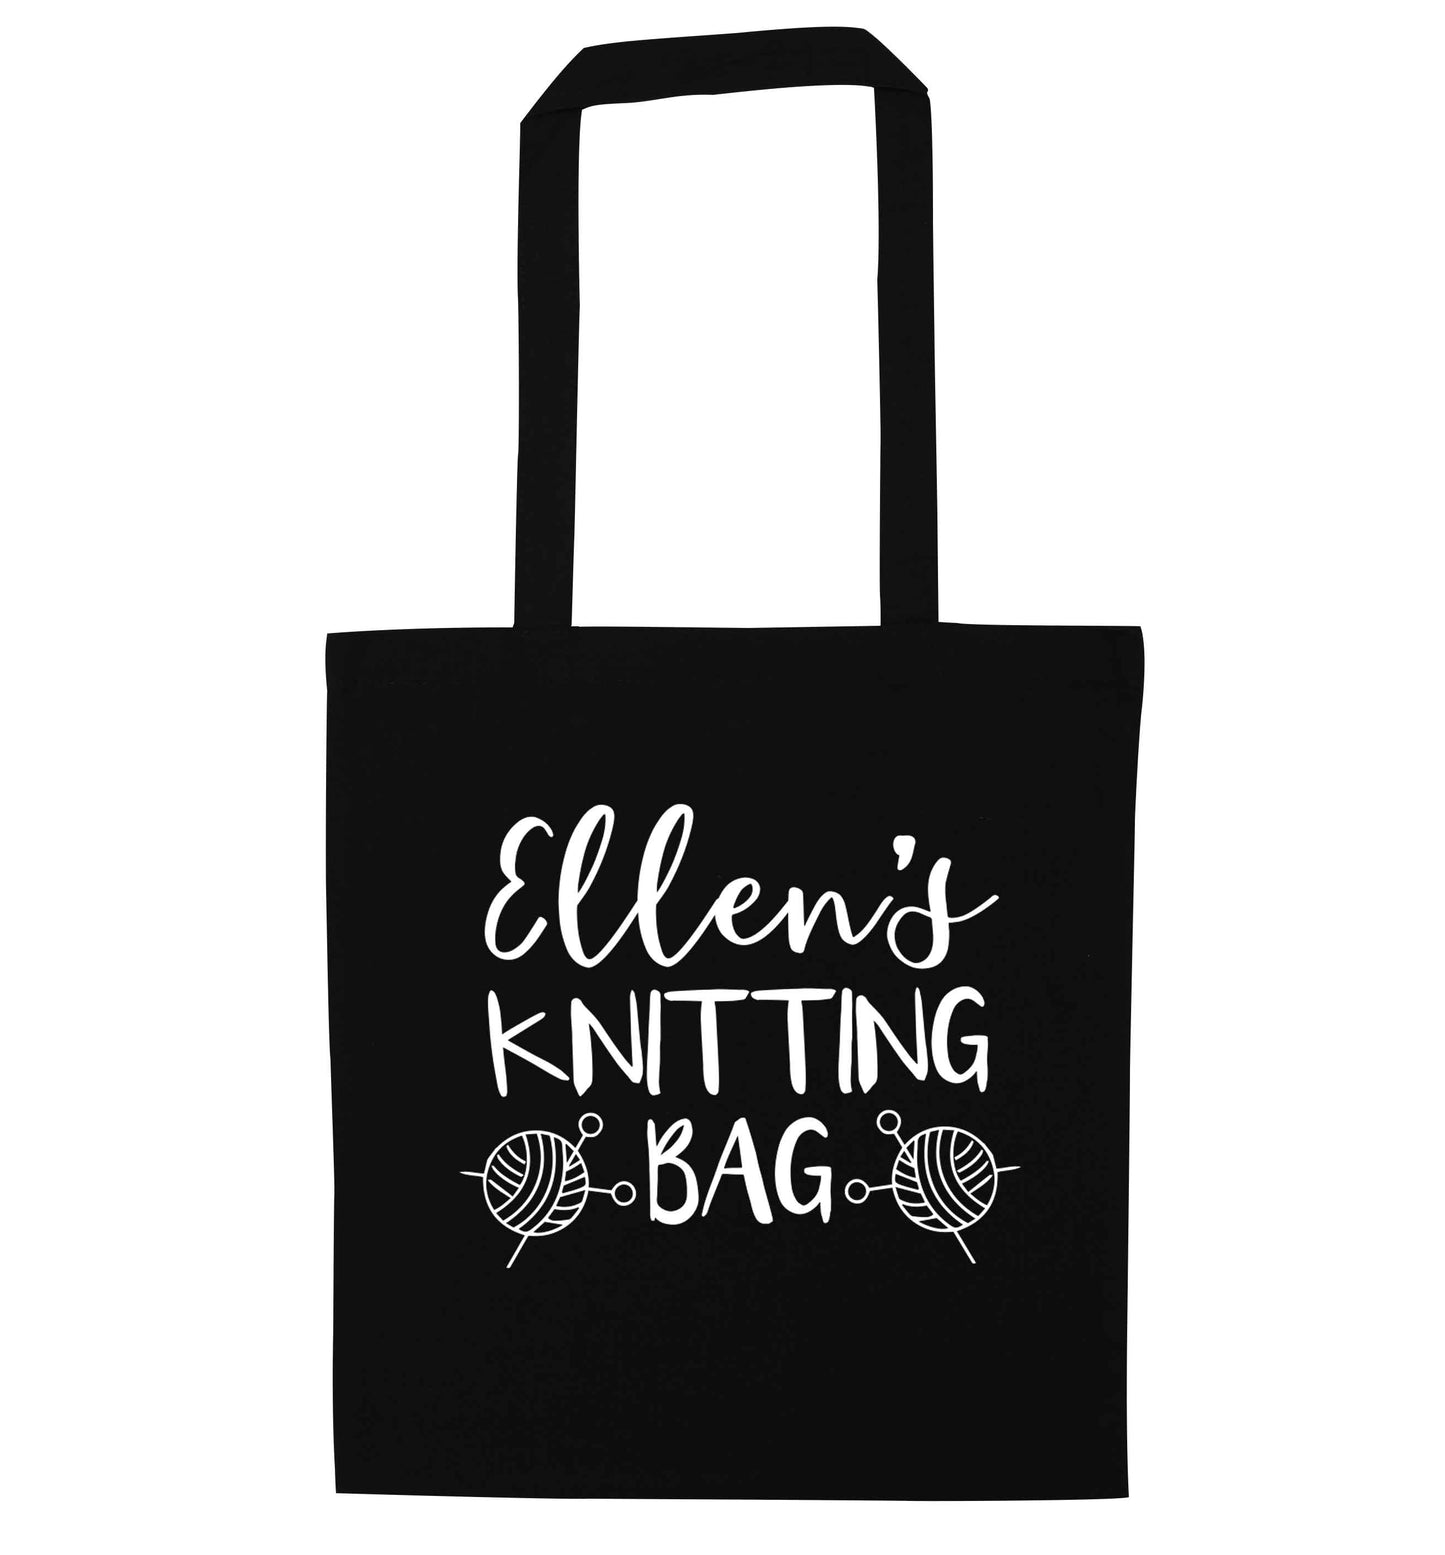 Personalised knitting bag black tote bag